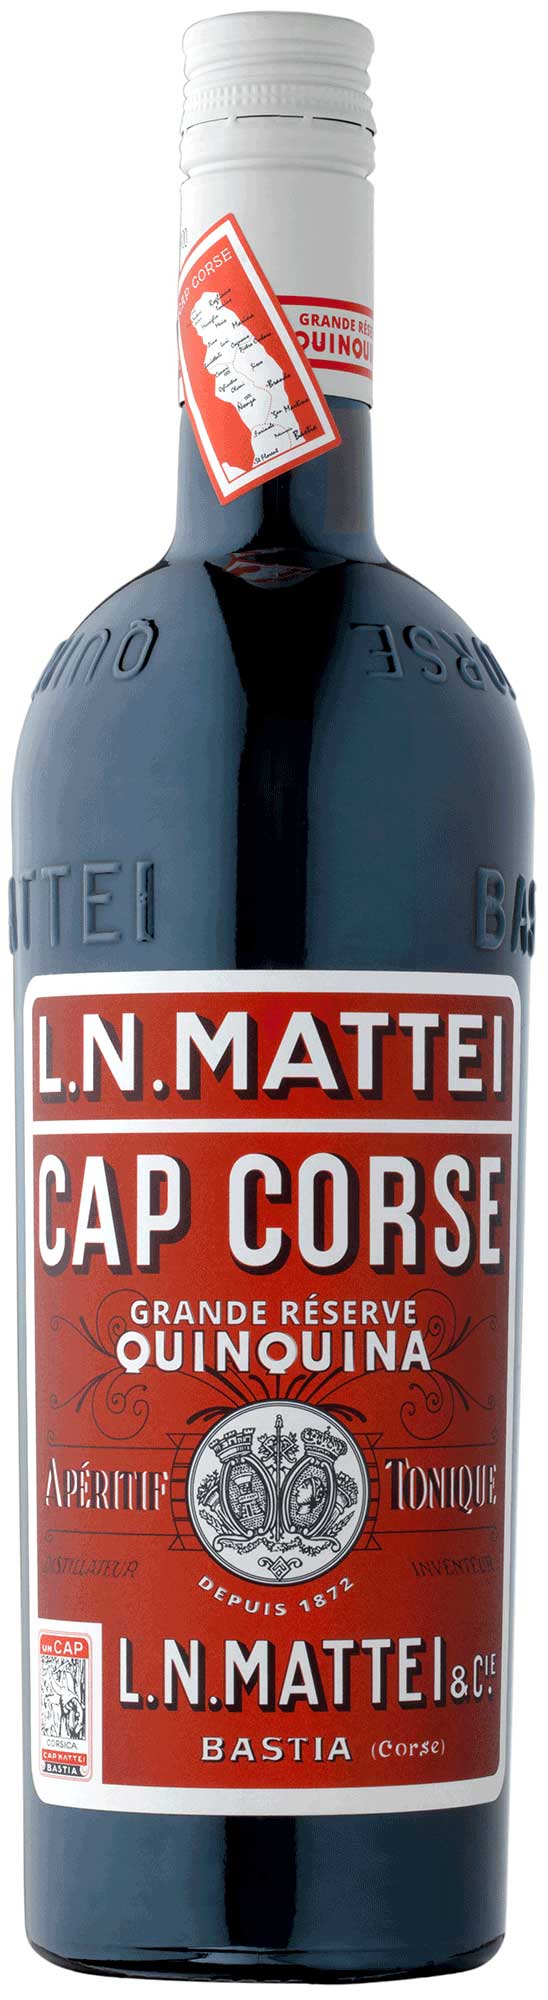 L.N. Mattei - Cap Corse Rouge (750)